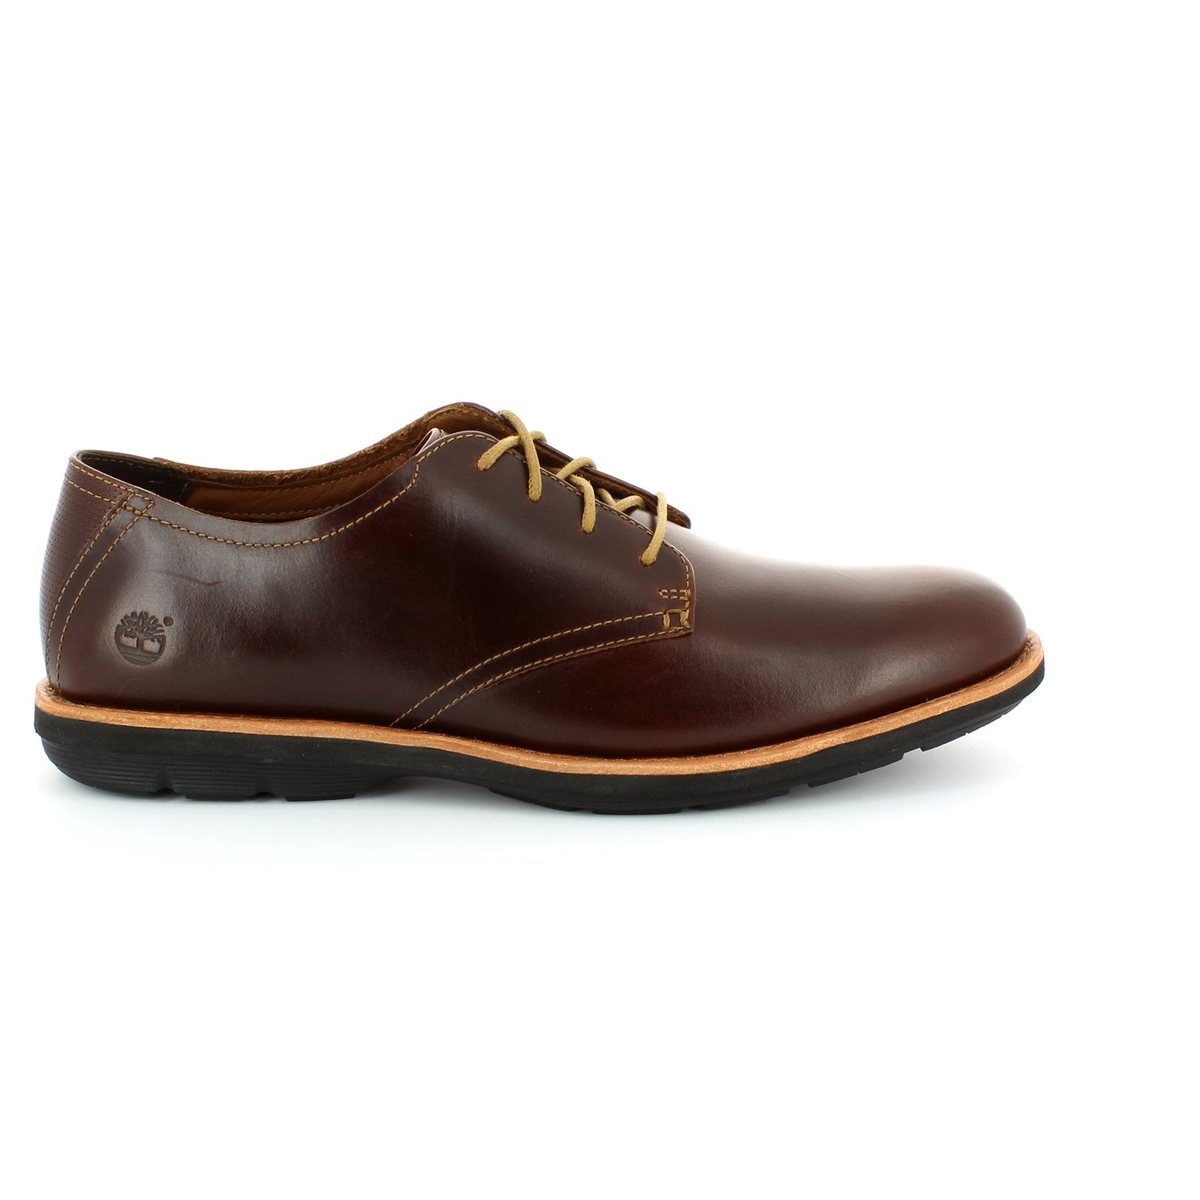 Timberland Kempton Oxford 9006B-21 Tan casual shoes